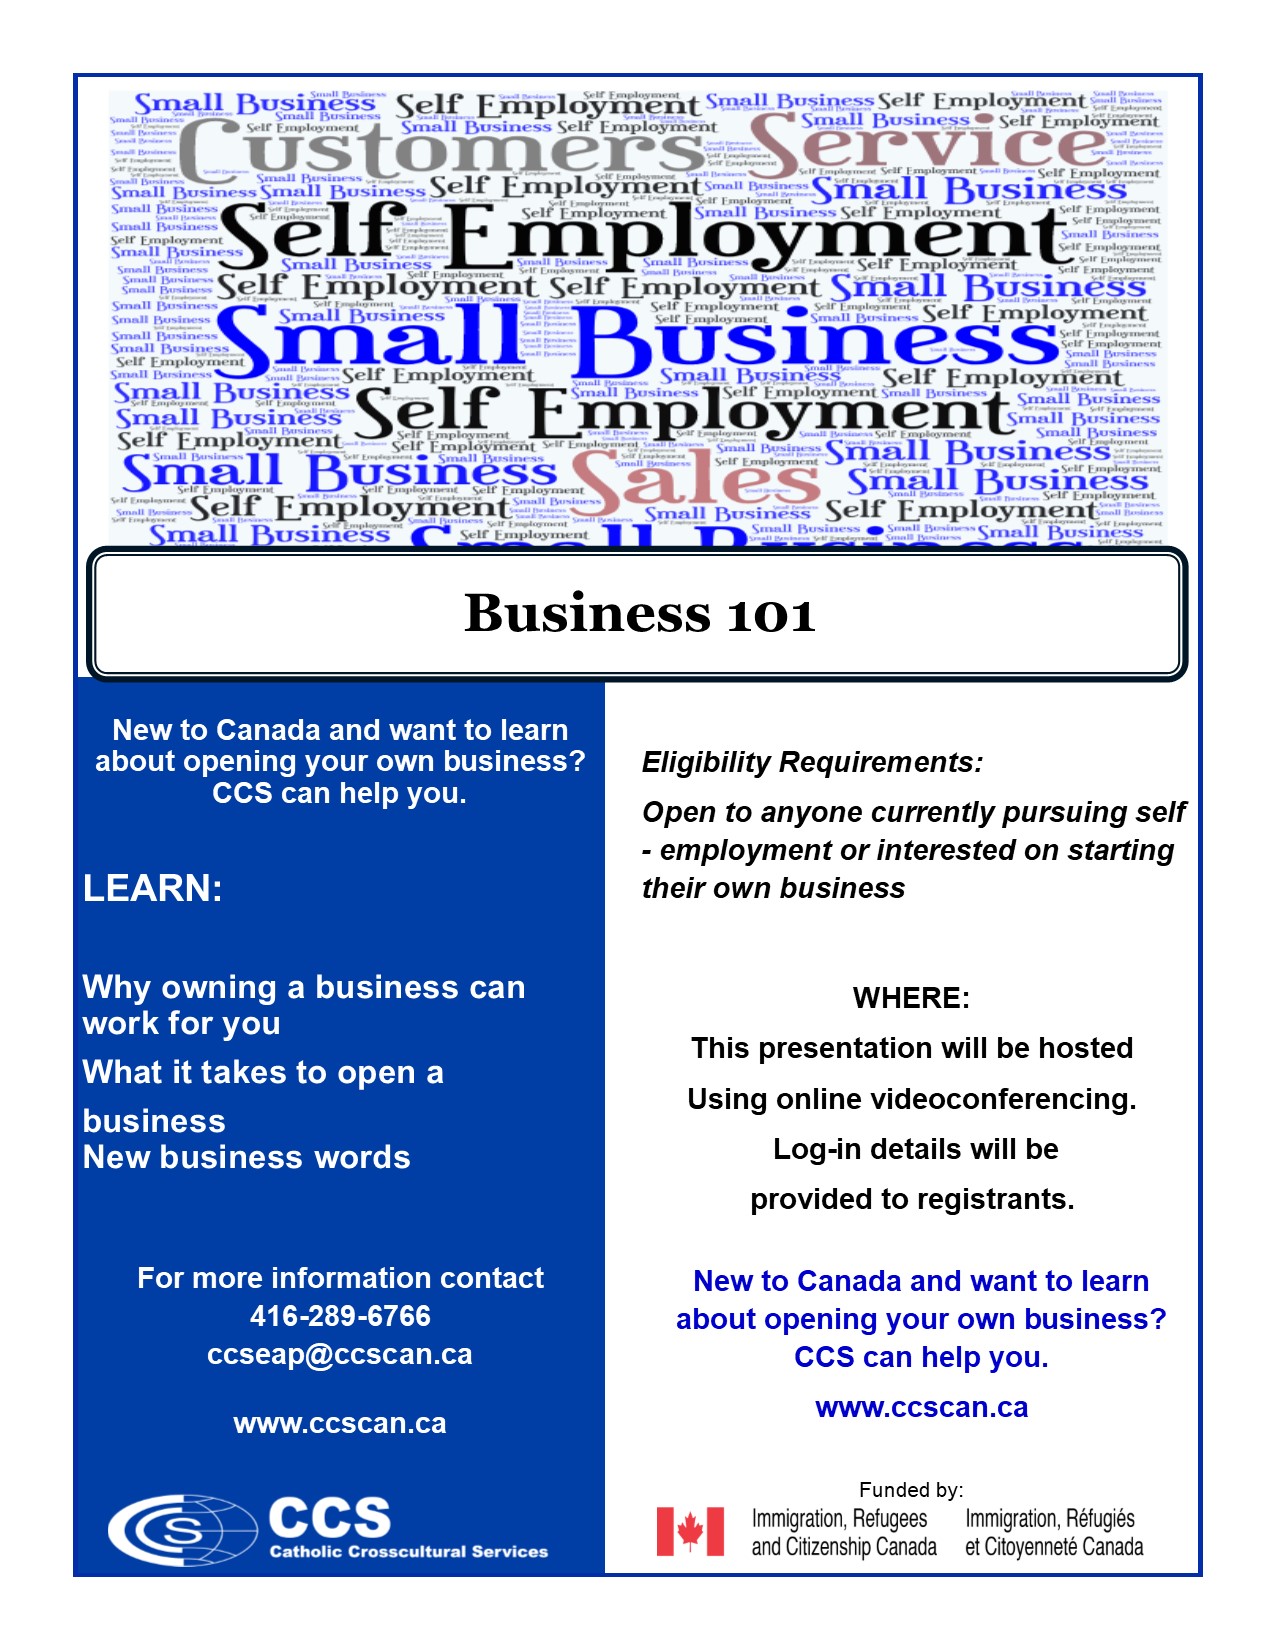 Business 101 flyer online